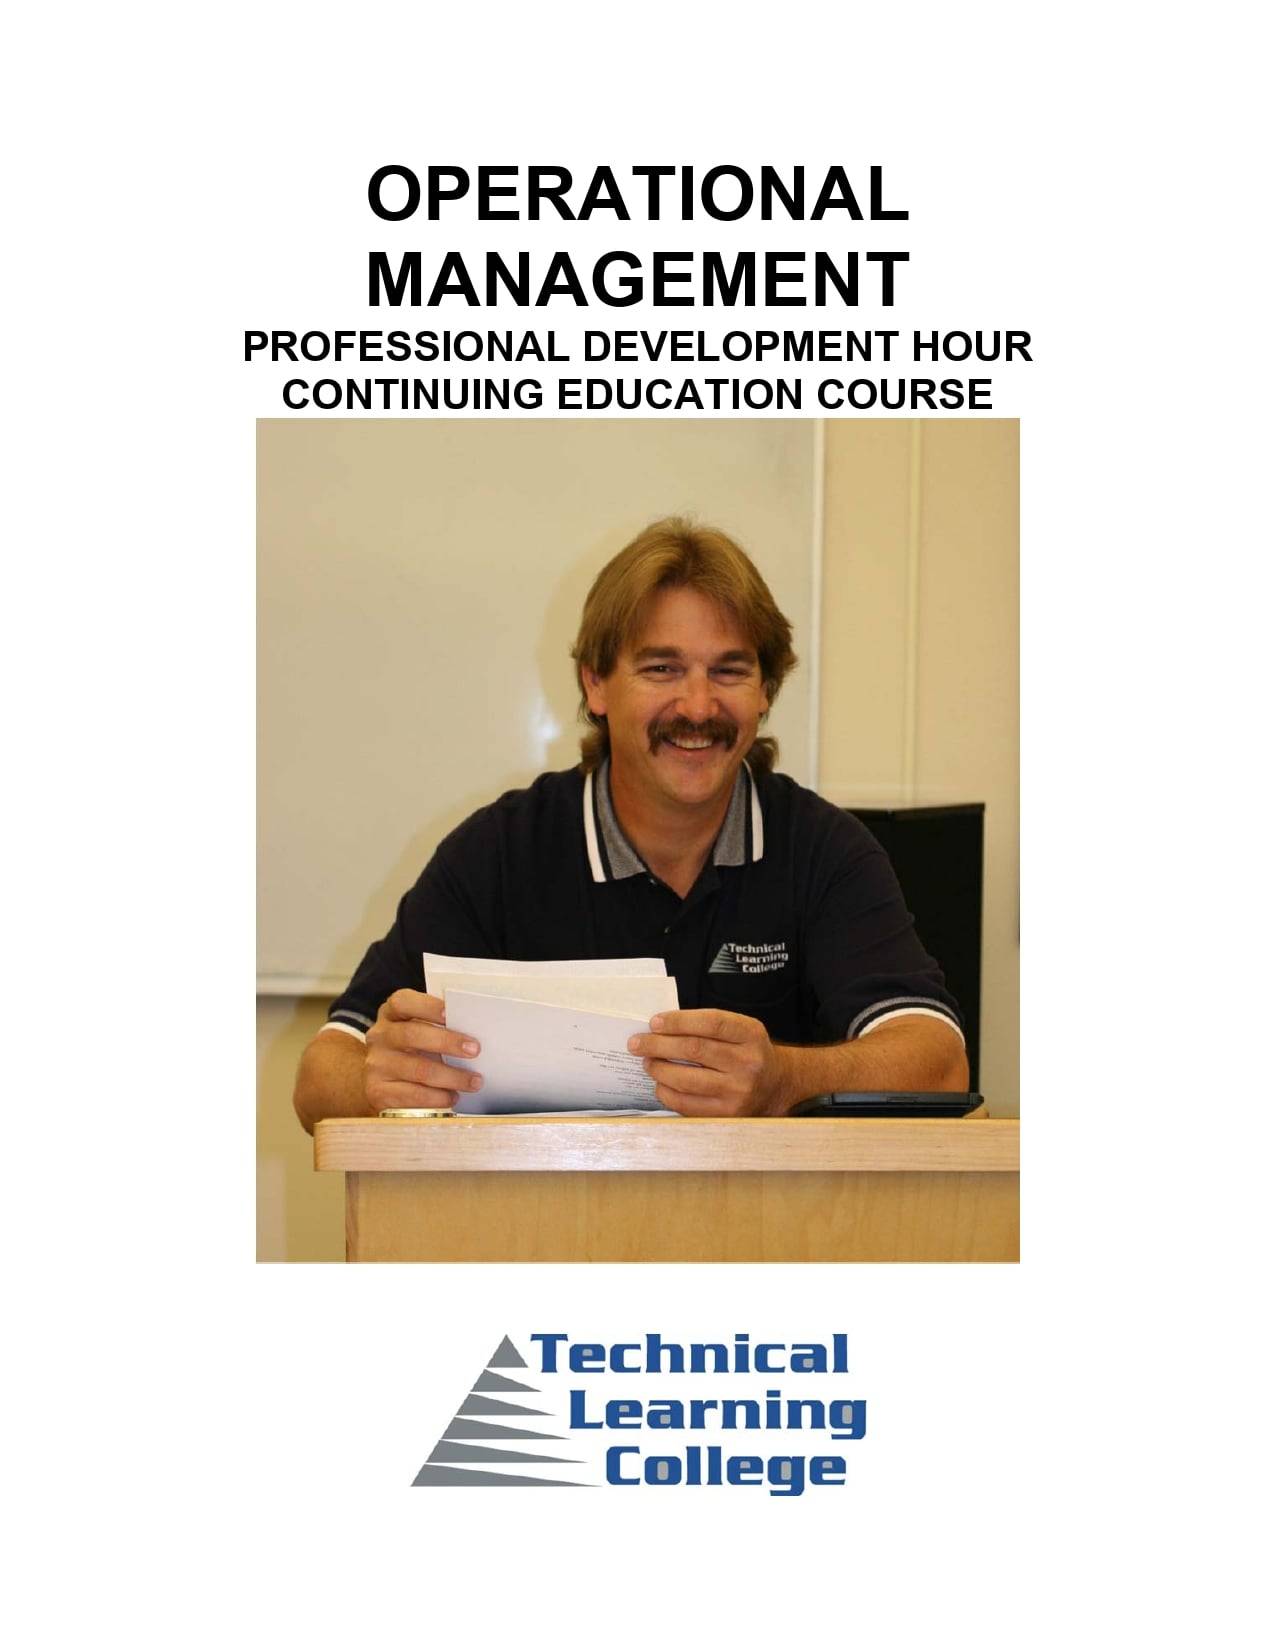 Operational Management (Professional Development Hour Continuing Education Course)